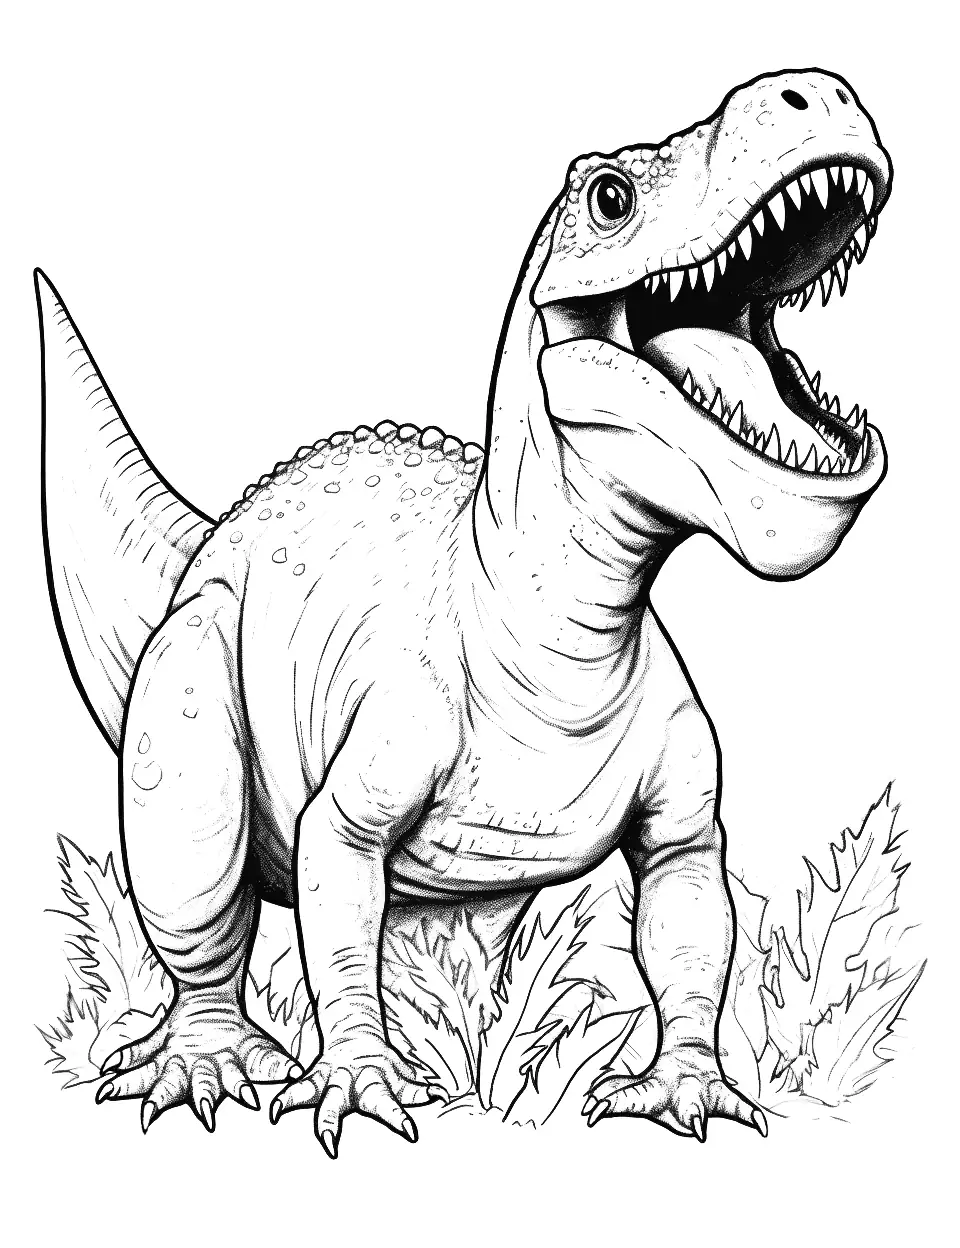 Indominus Rex Rampage Dinosaur Coloring Page - The Indominus Rex on a rampage in Jurassic World.